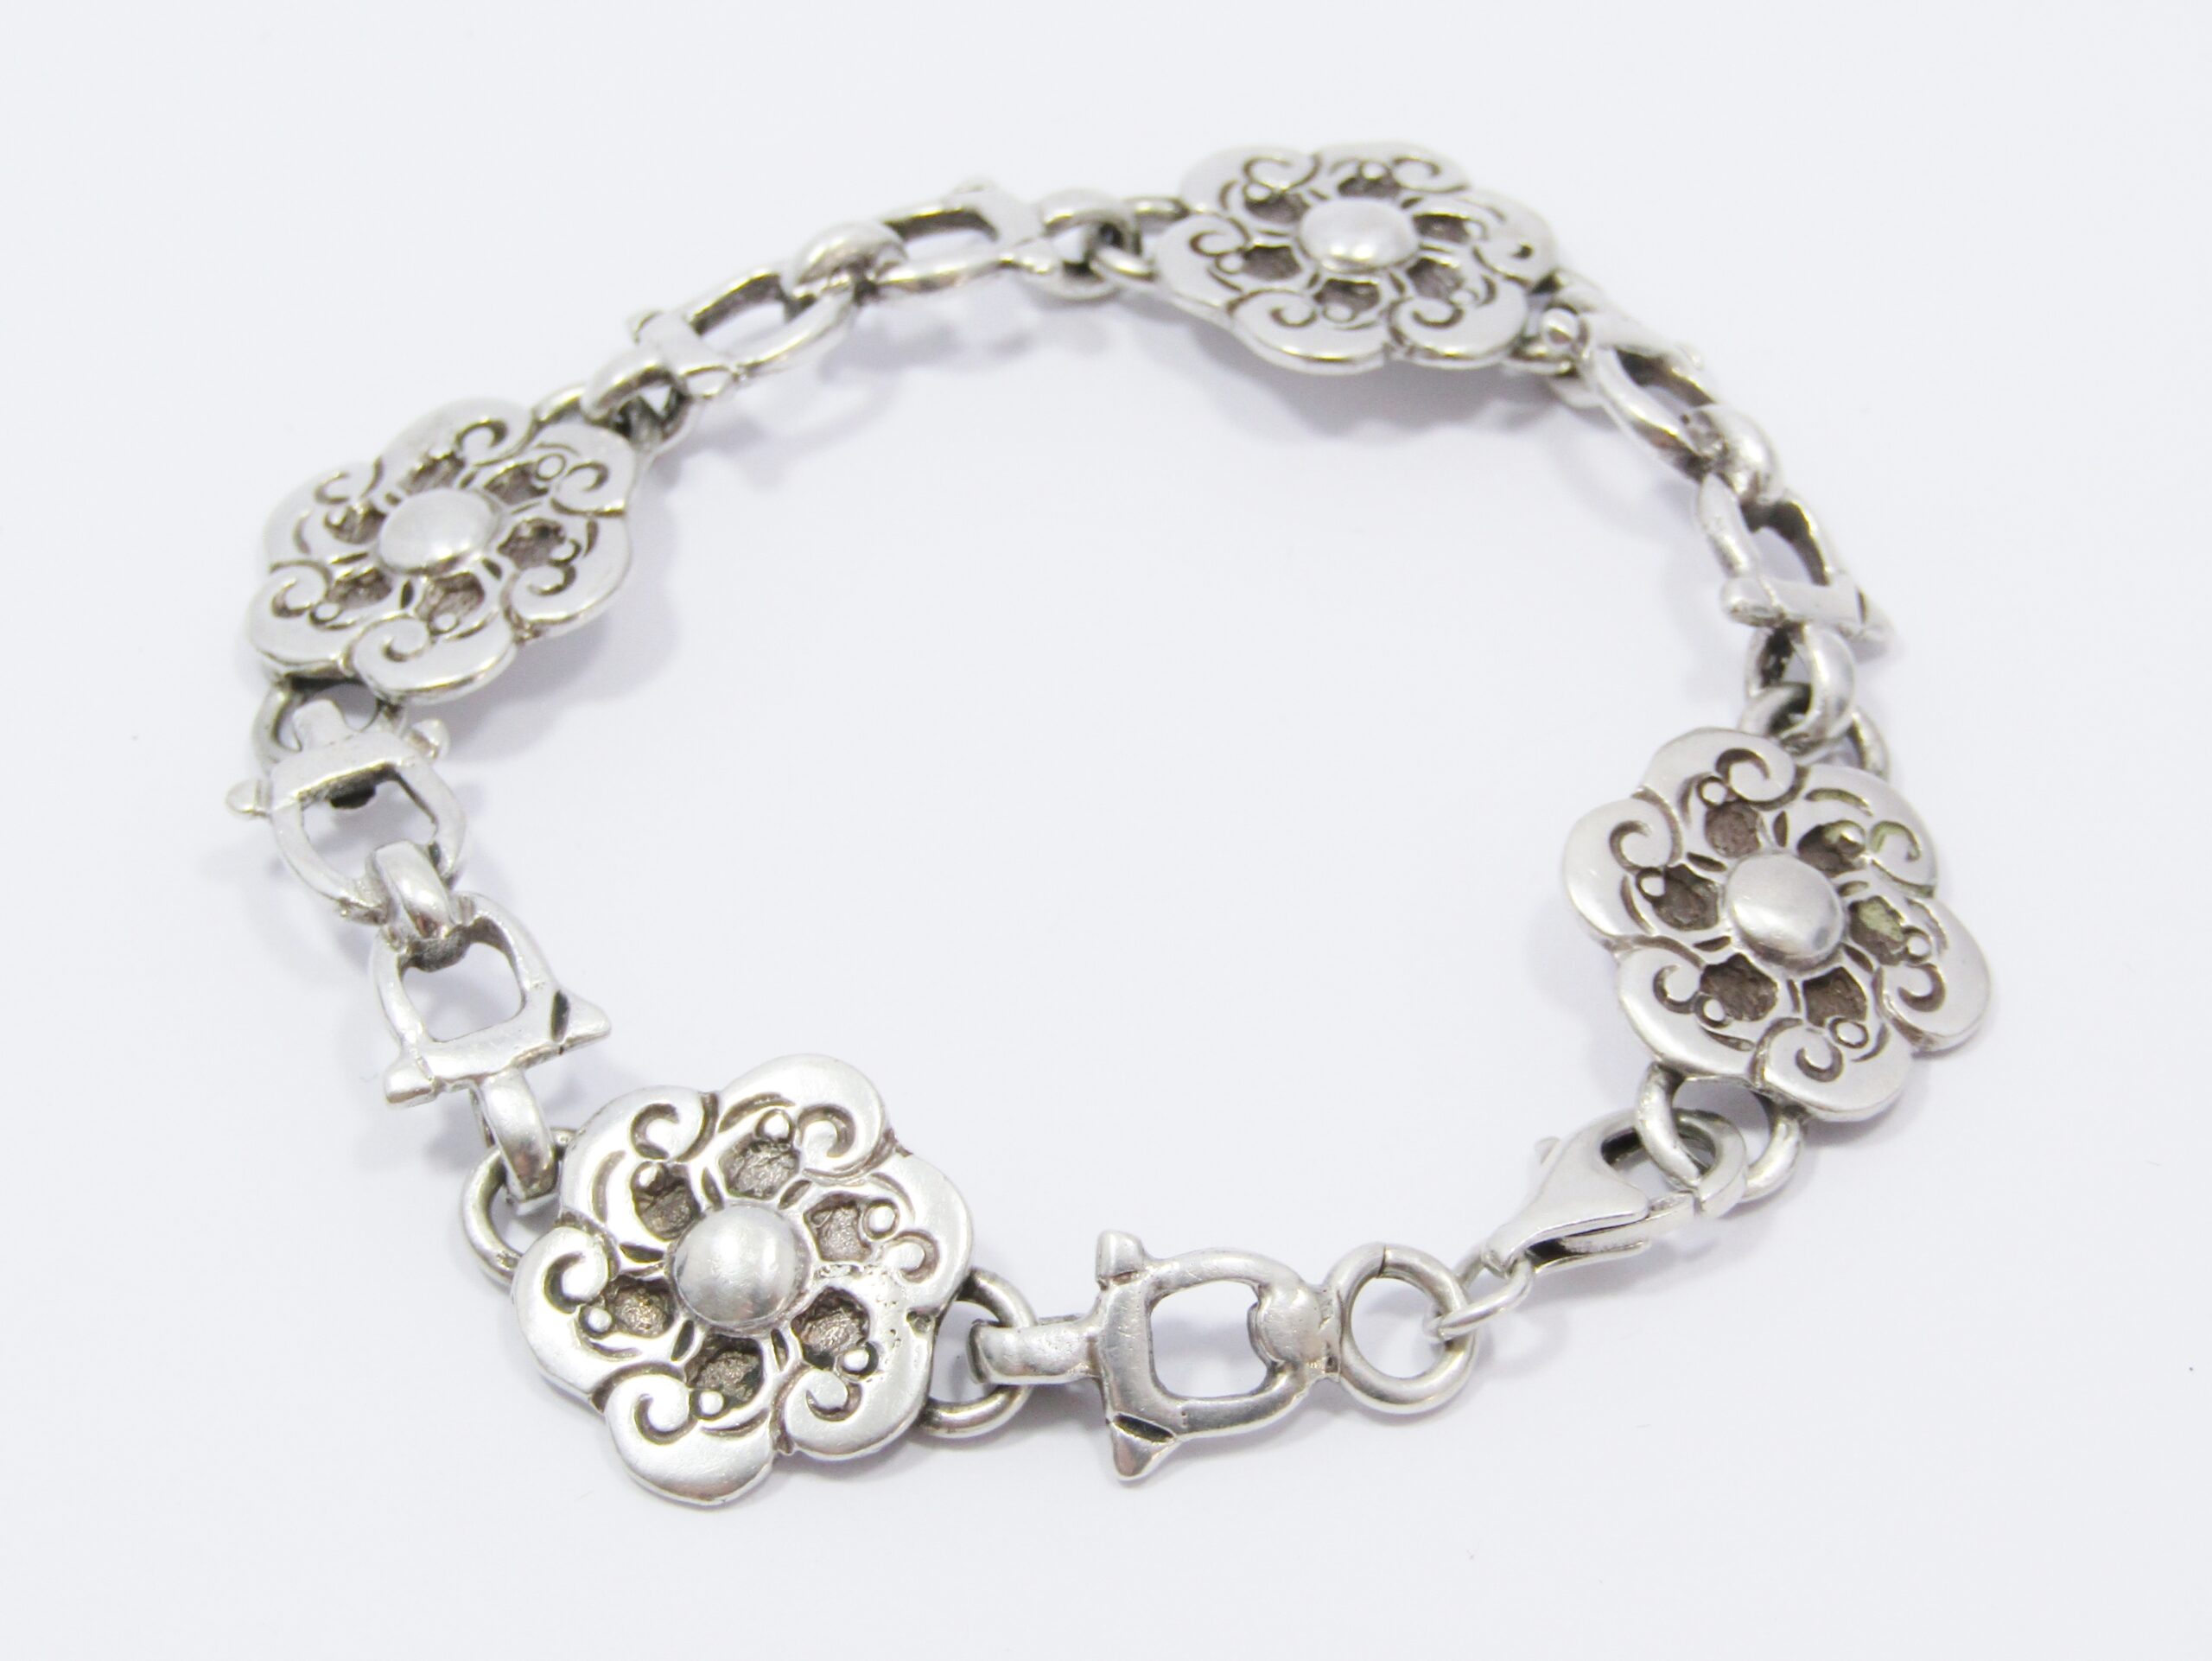 A Gorgeous Weighty Flower Bracelet in Sterling Silver.